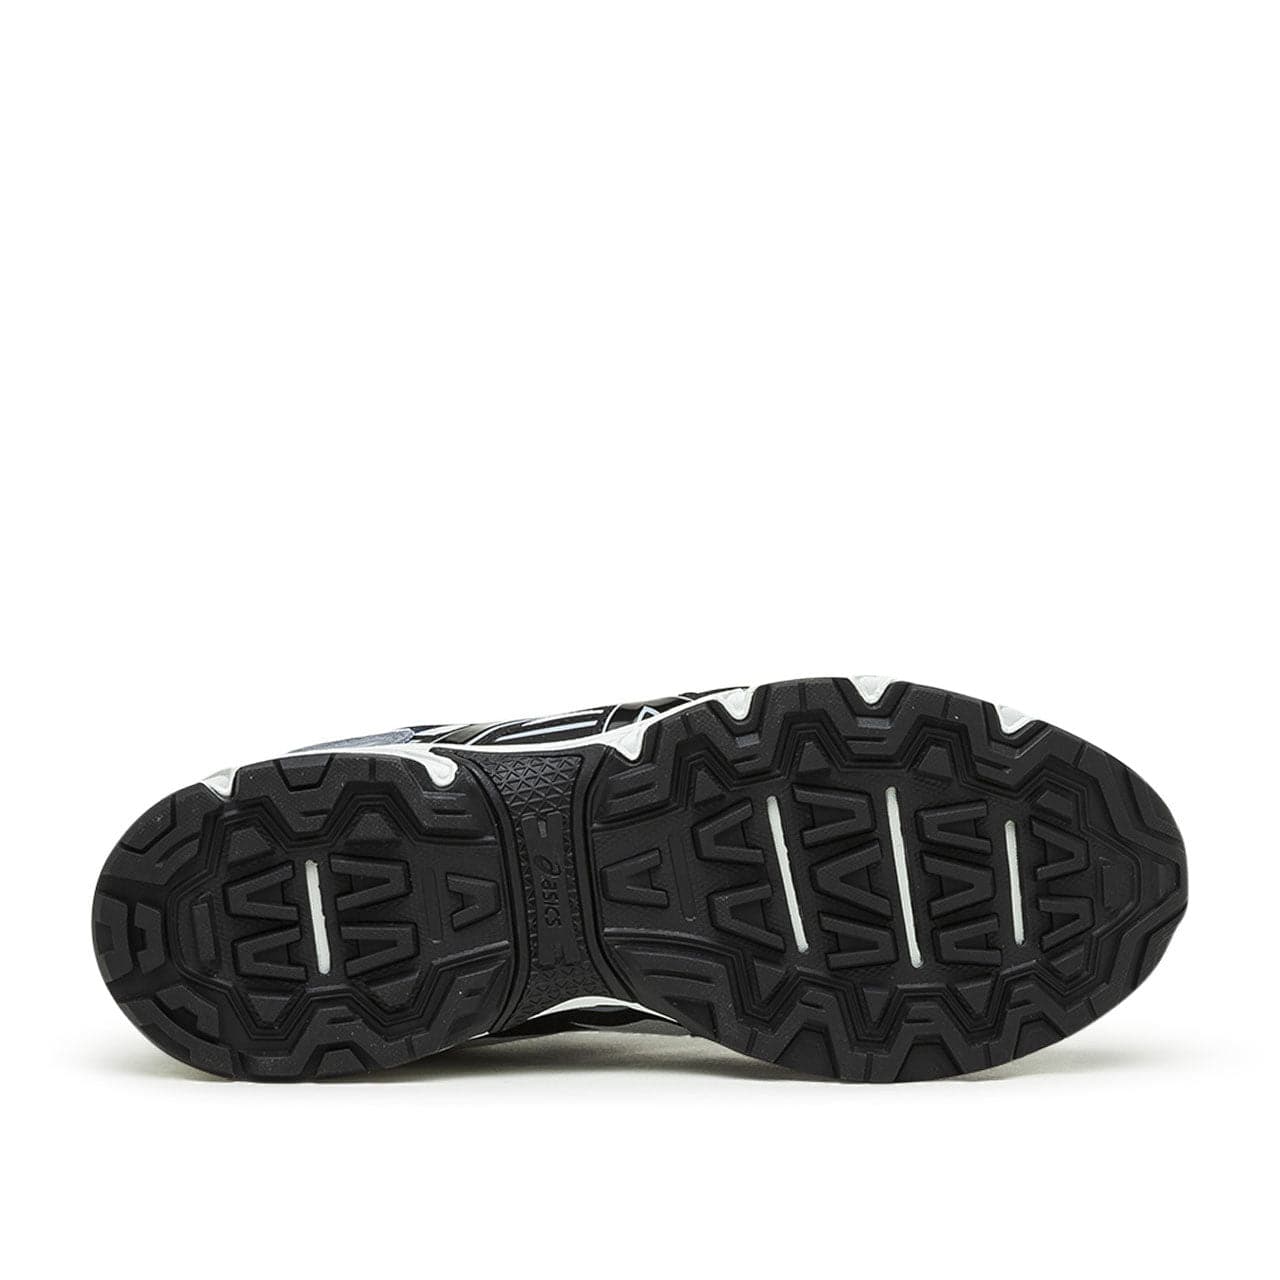  NIKE Women's Low-Top Sneakers, Schwarz (Black/White 021), 6